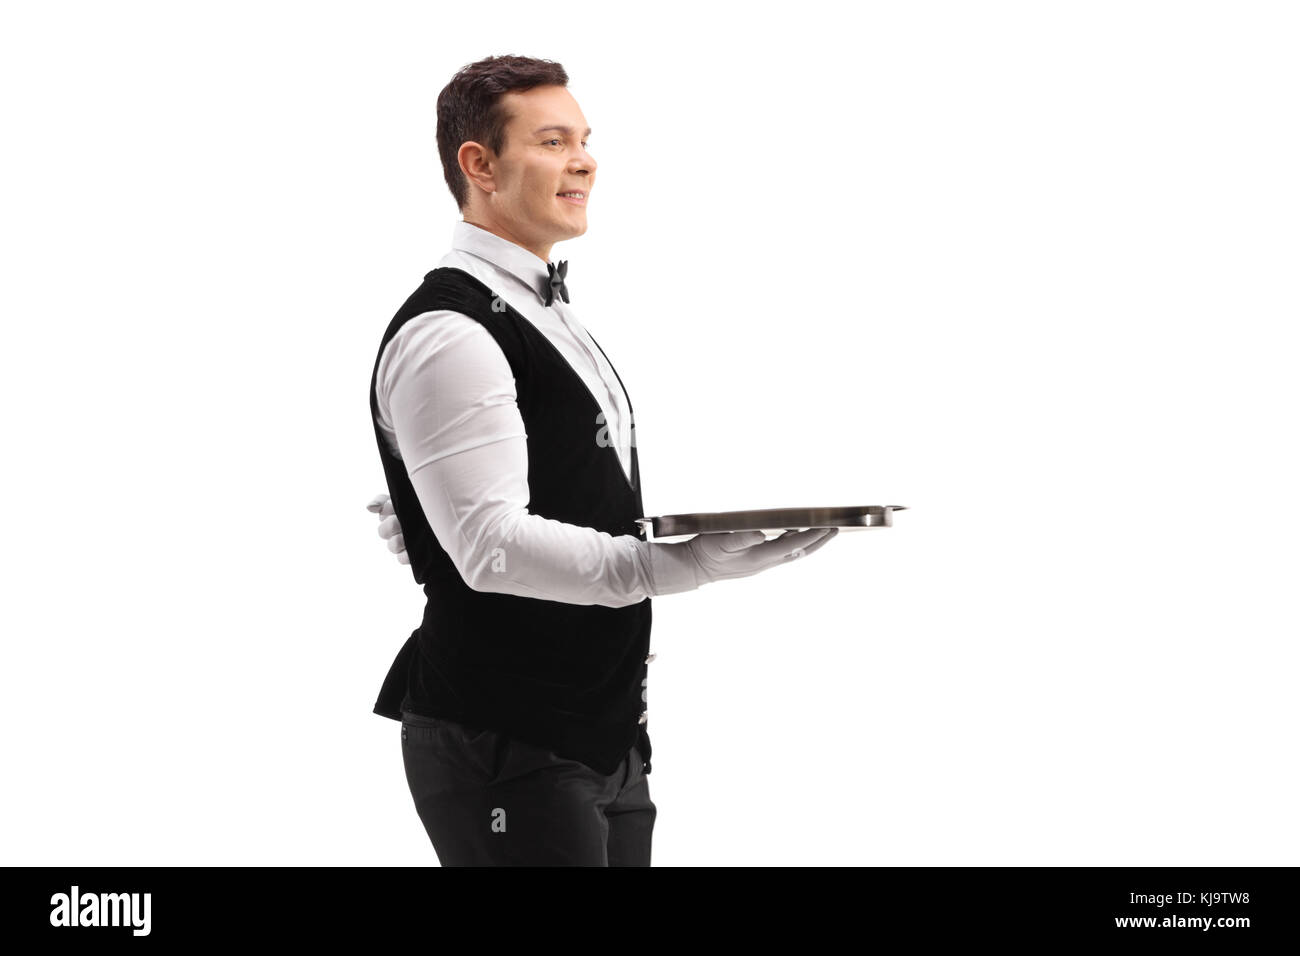 Waiter holding an empty tray isolated on white background Stock Photo